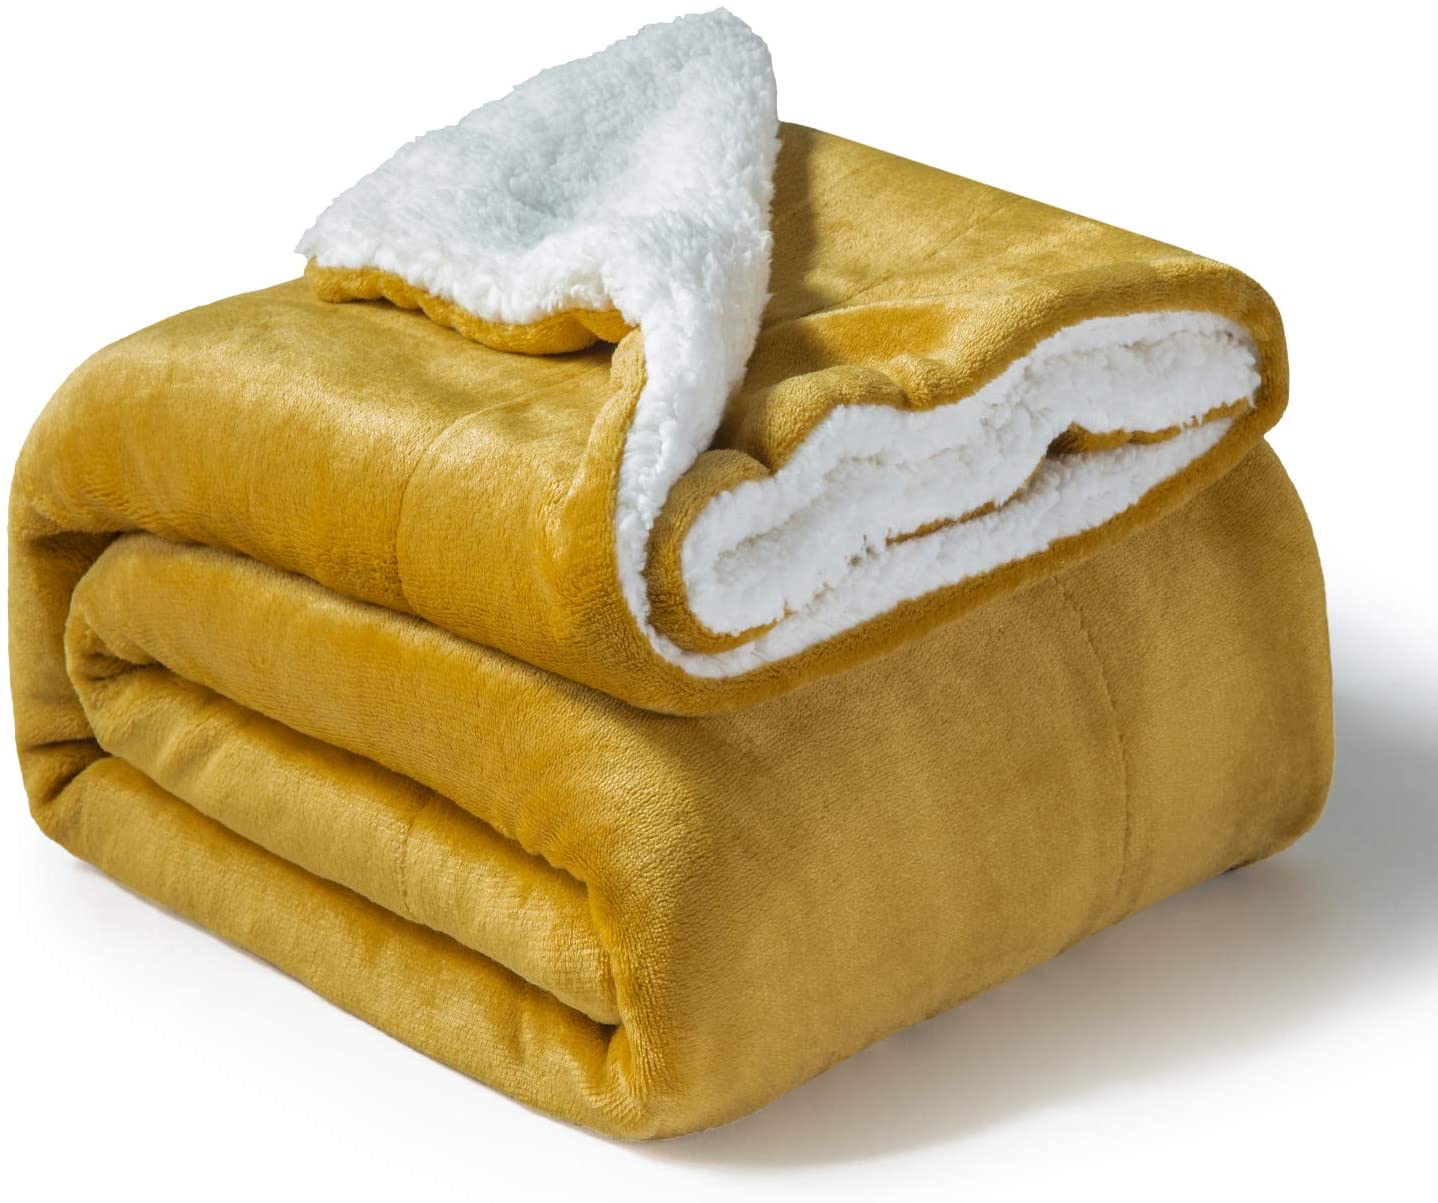 Bedsure Fleece Blanket King Size Gold Yellow Lightweight Super Soft Cozy Luxury